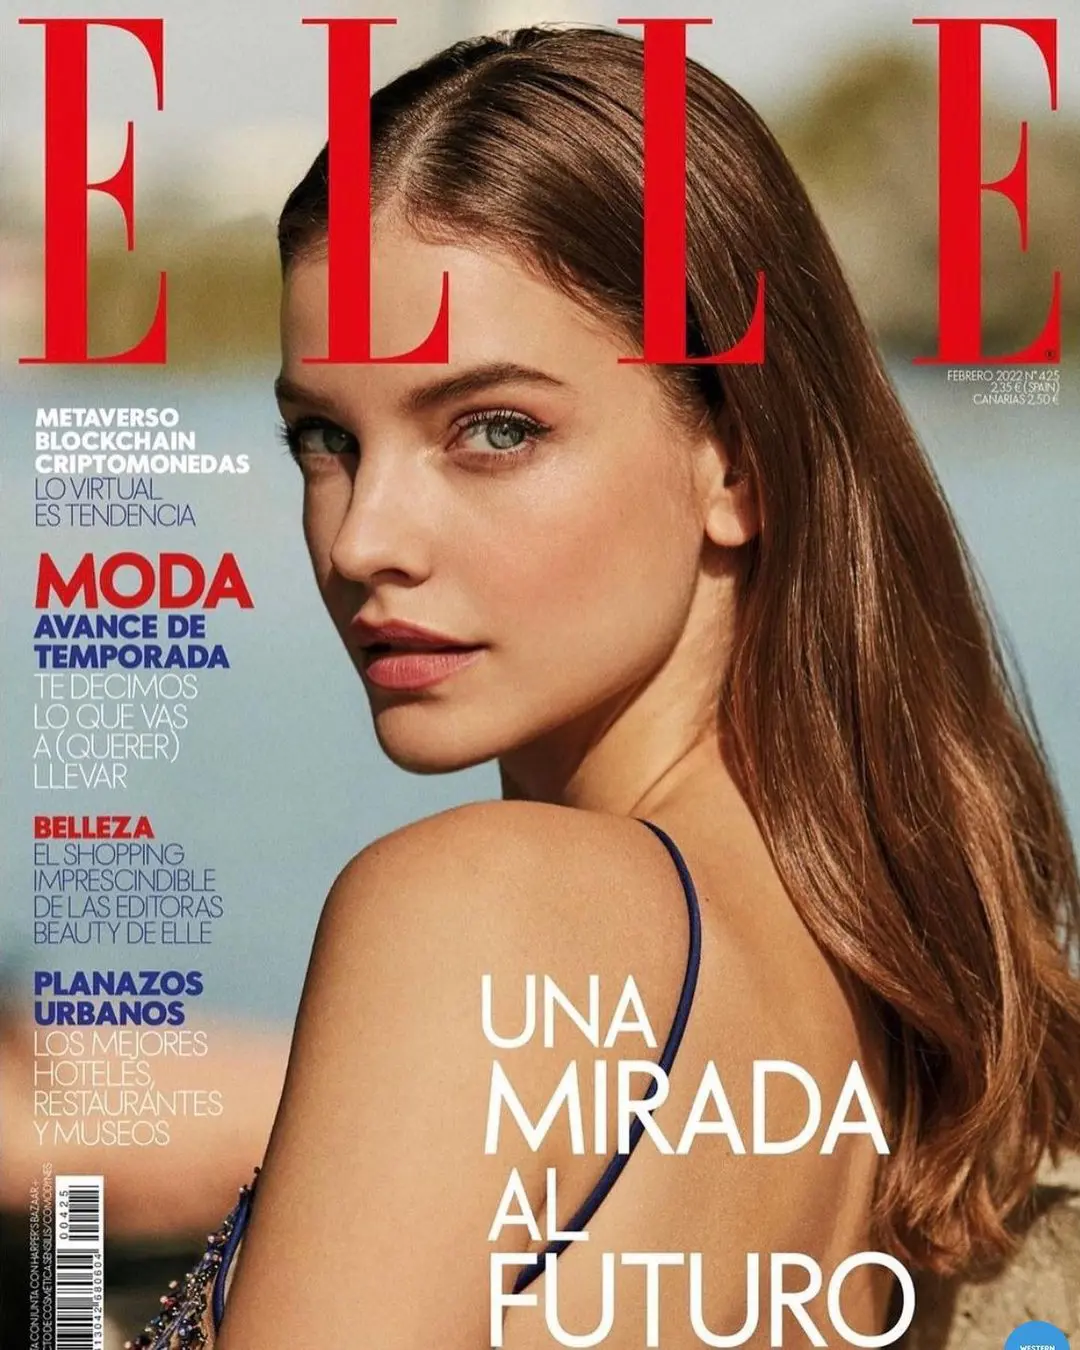 Barbara in the Elle magazine's Spain Cover in January.